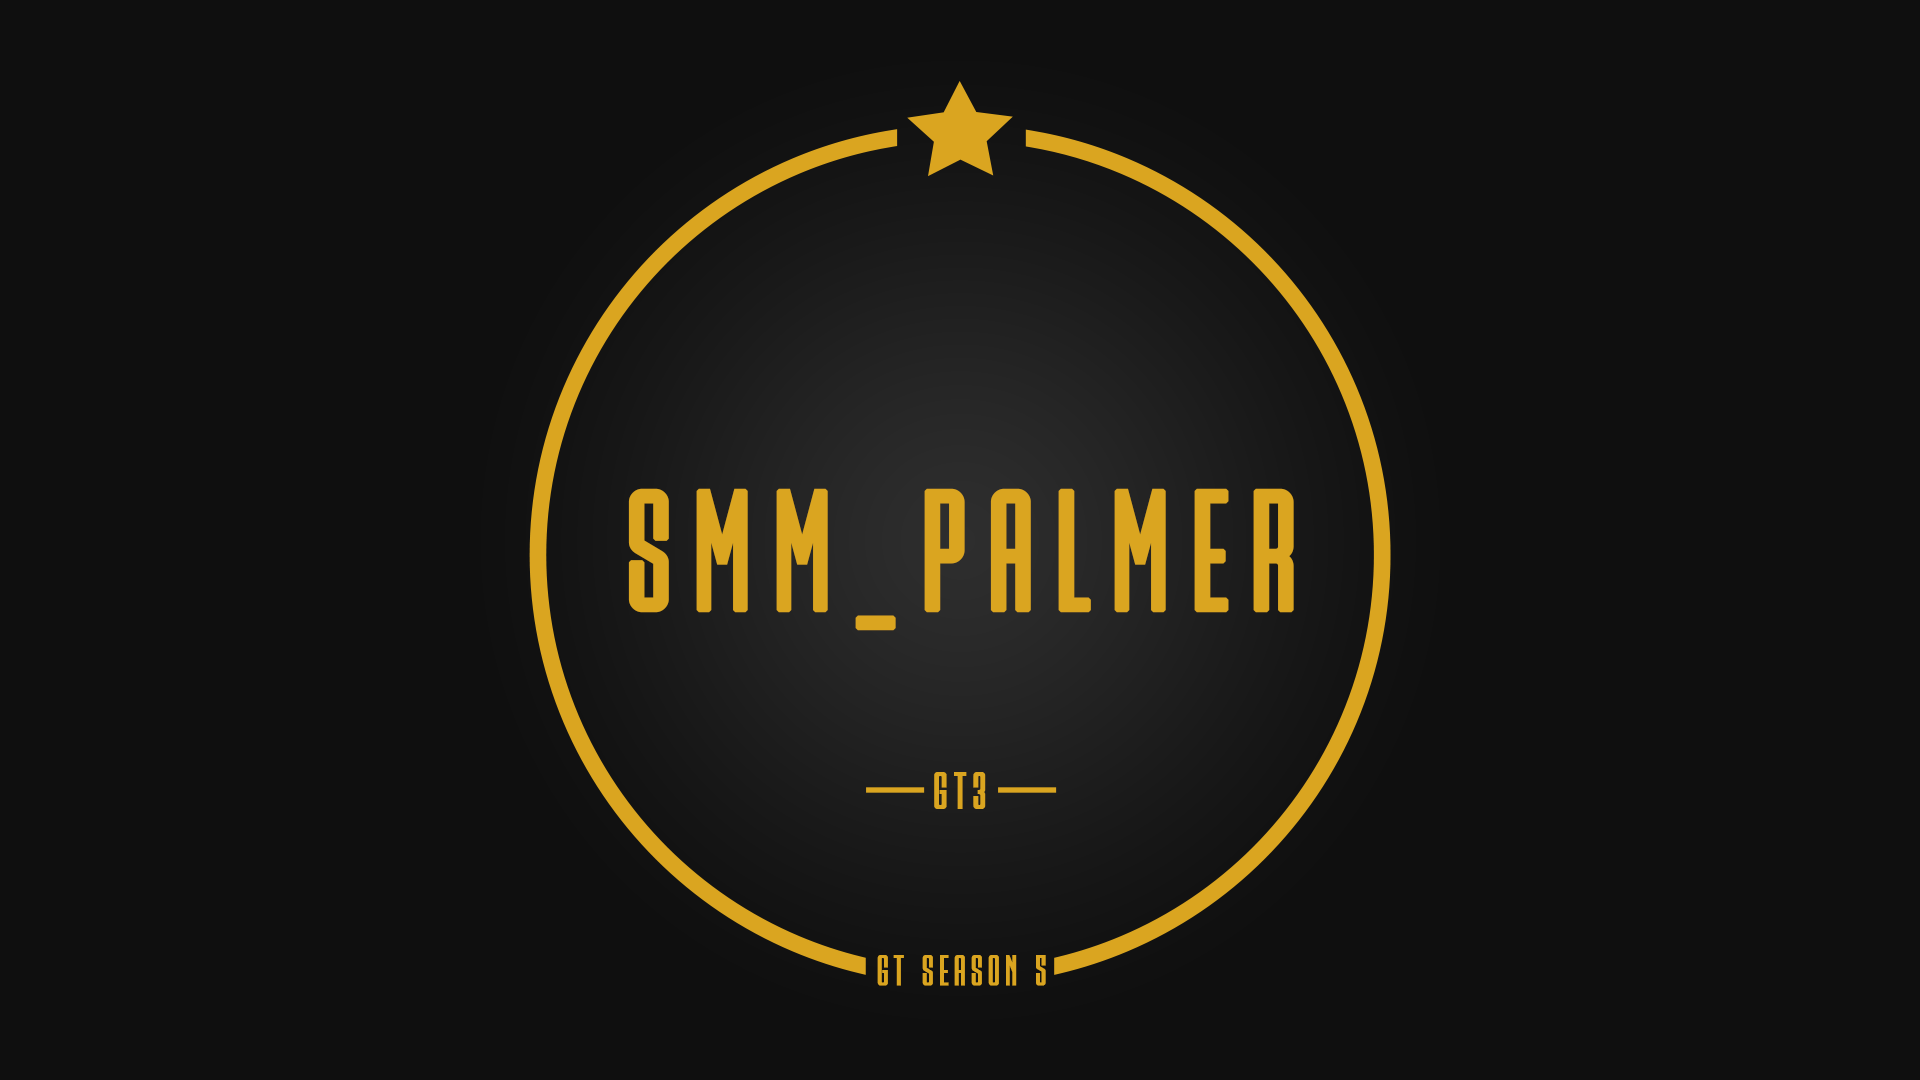 Season 5 Champion - SMM_Palmer